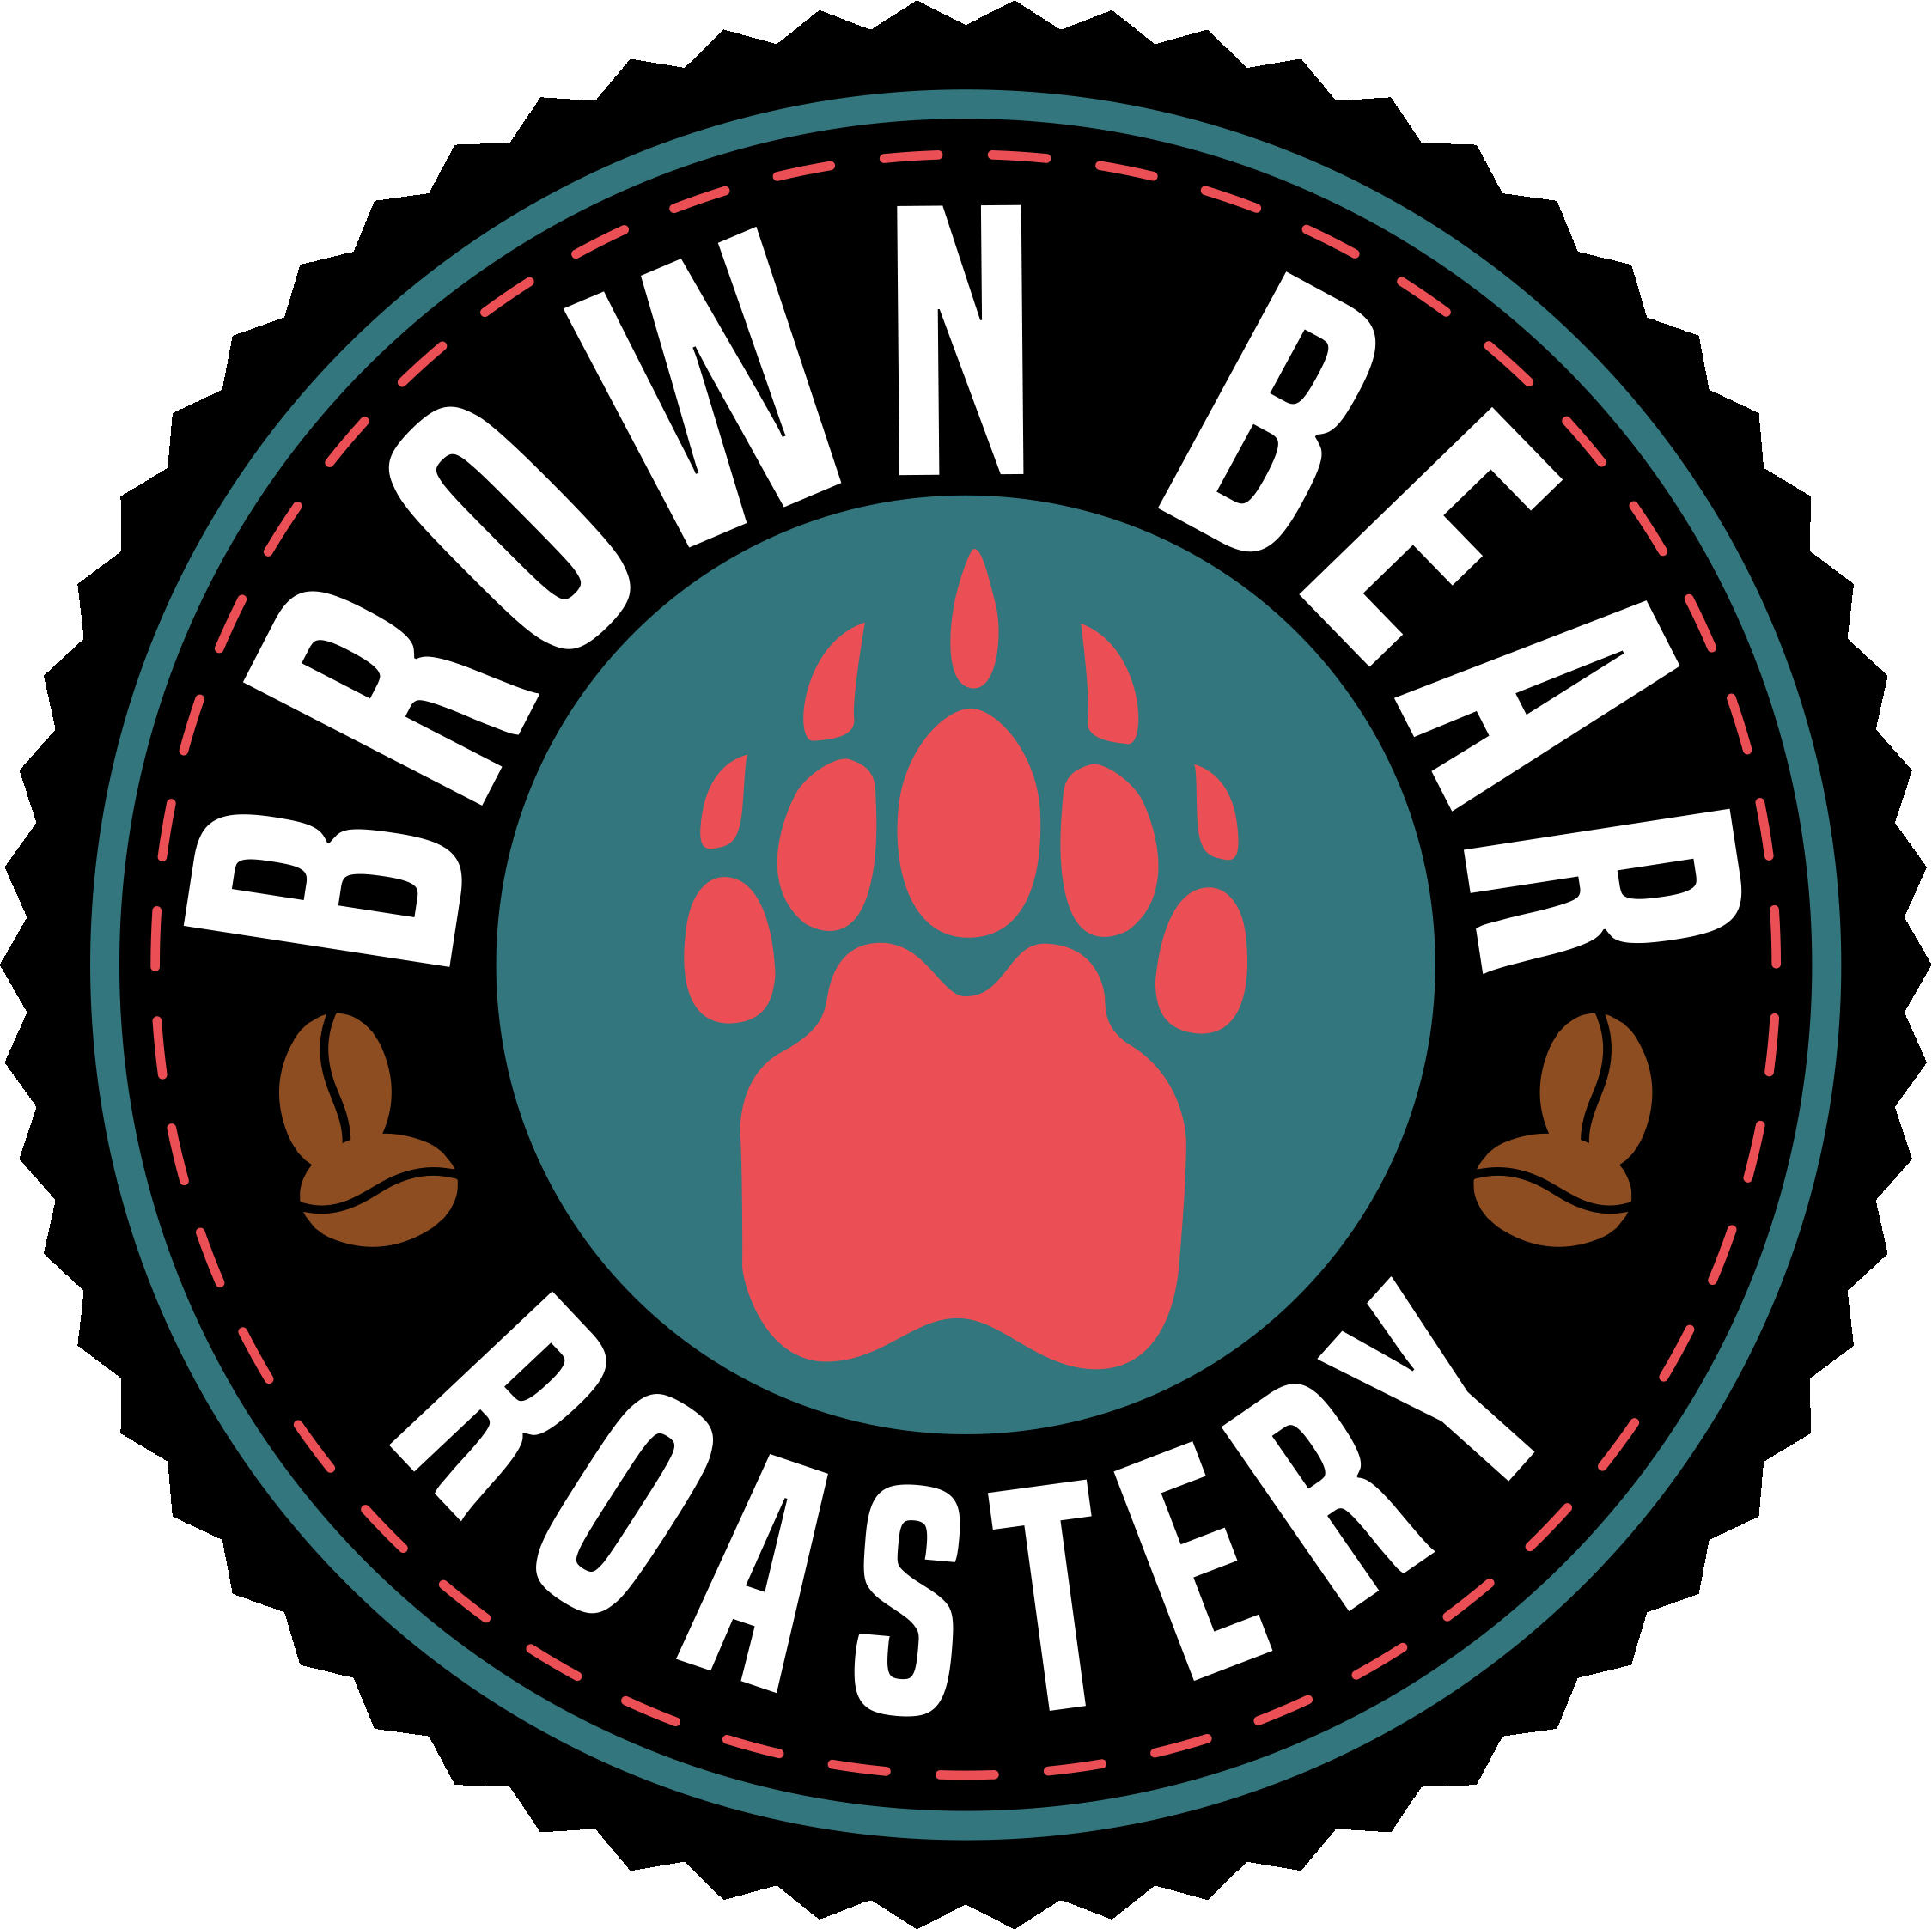 Brown Bear Roastery